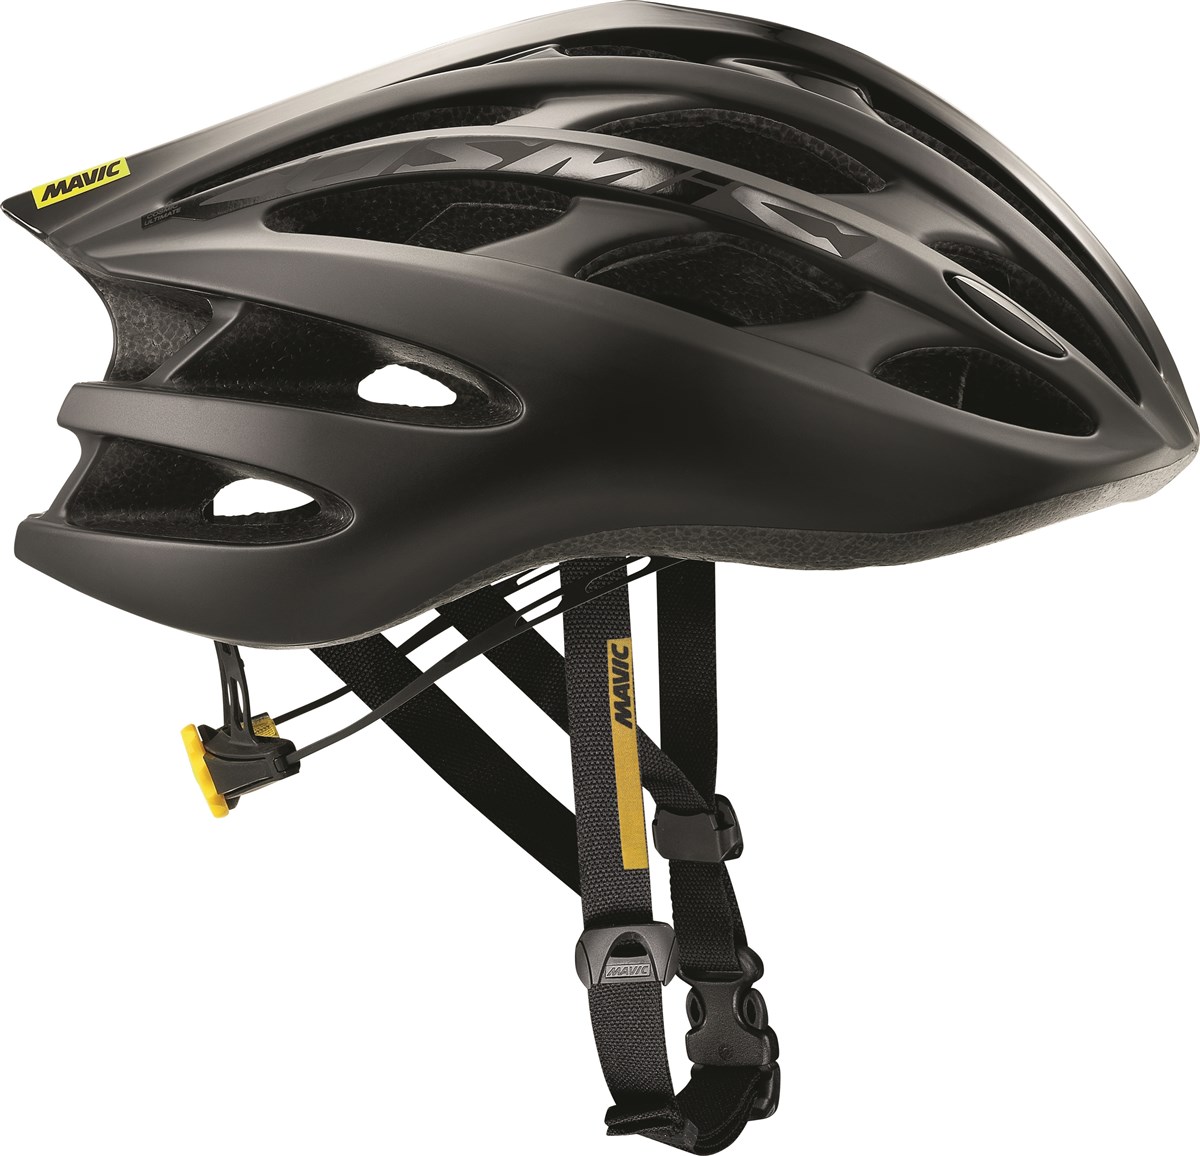 Mavic Cosmic Ultimate Road Cycling Helmet 2016 product image